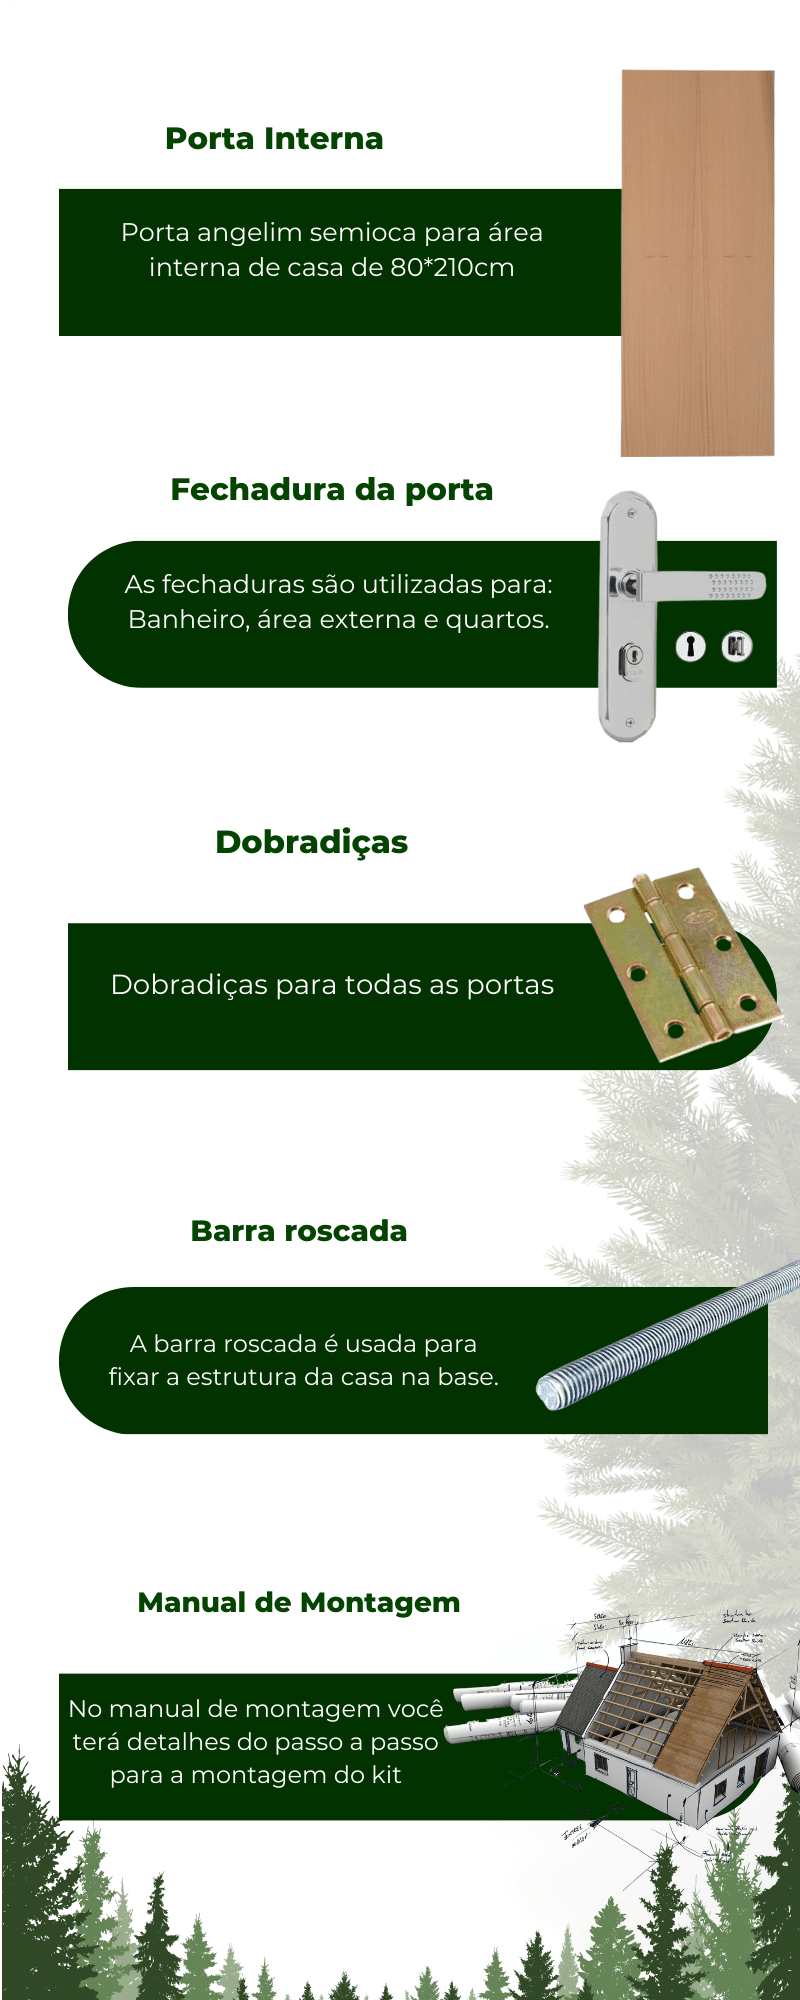 Português_(Portugal,_Brasil)_(4)[1]